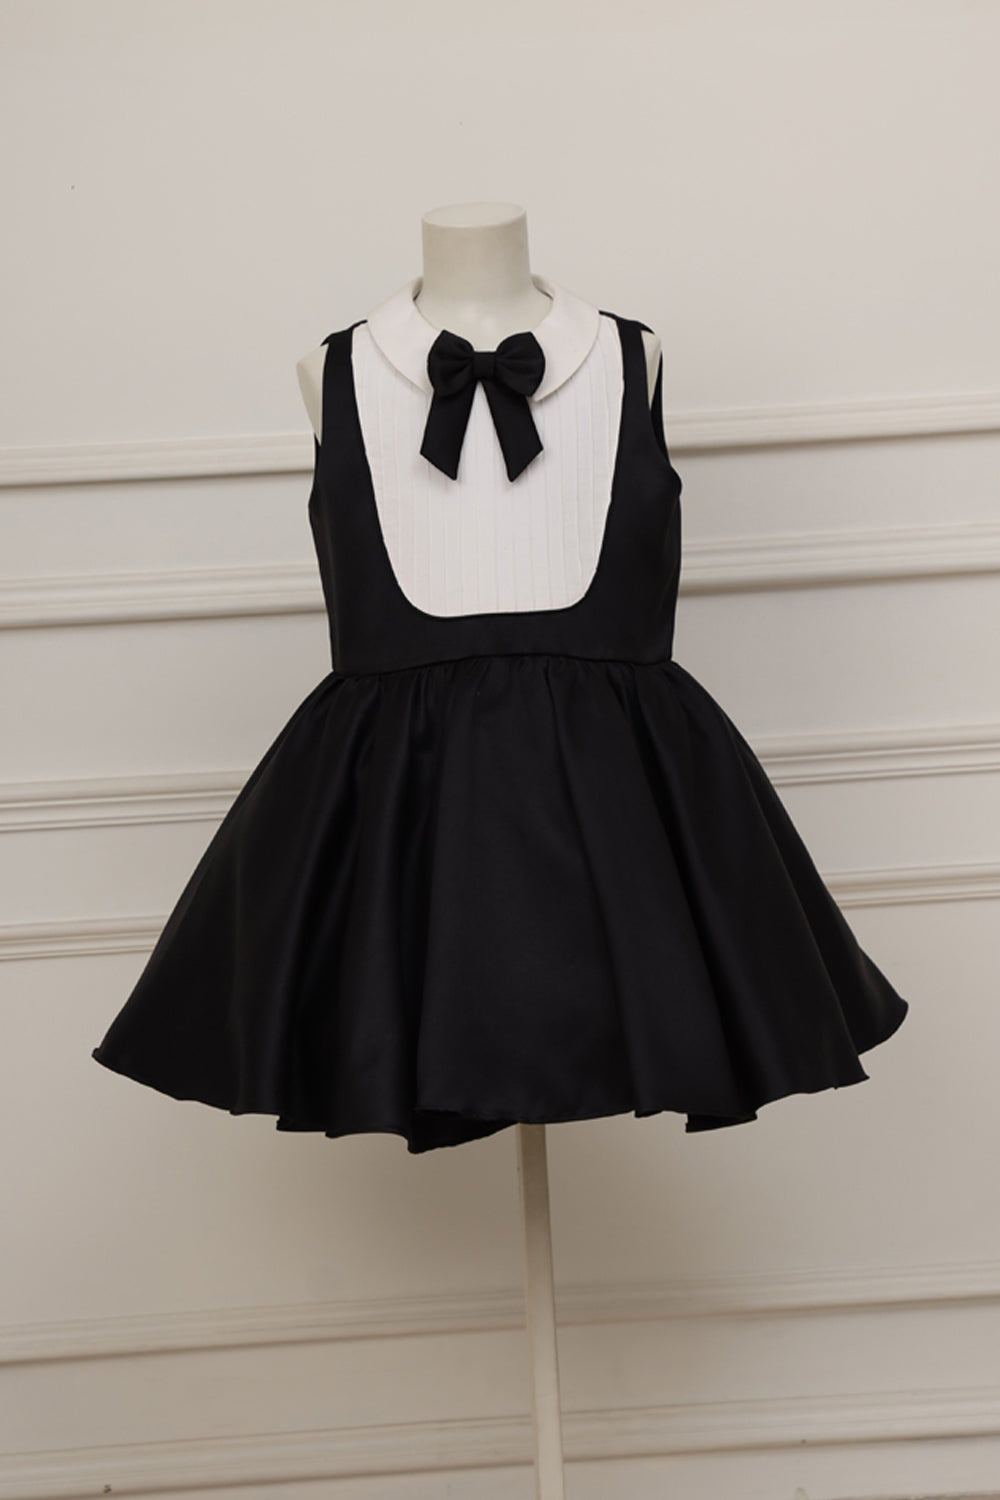 Black & White Classic Dress